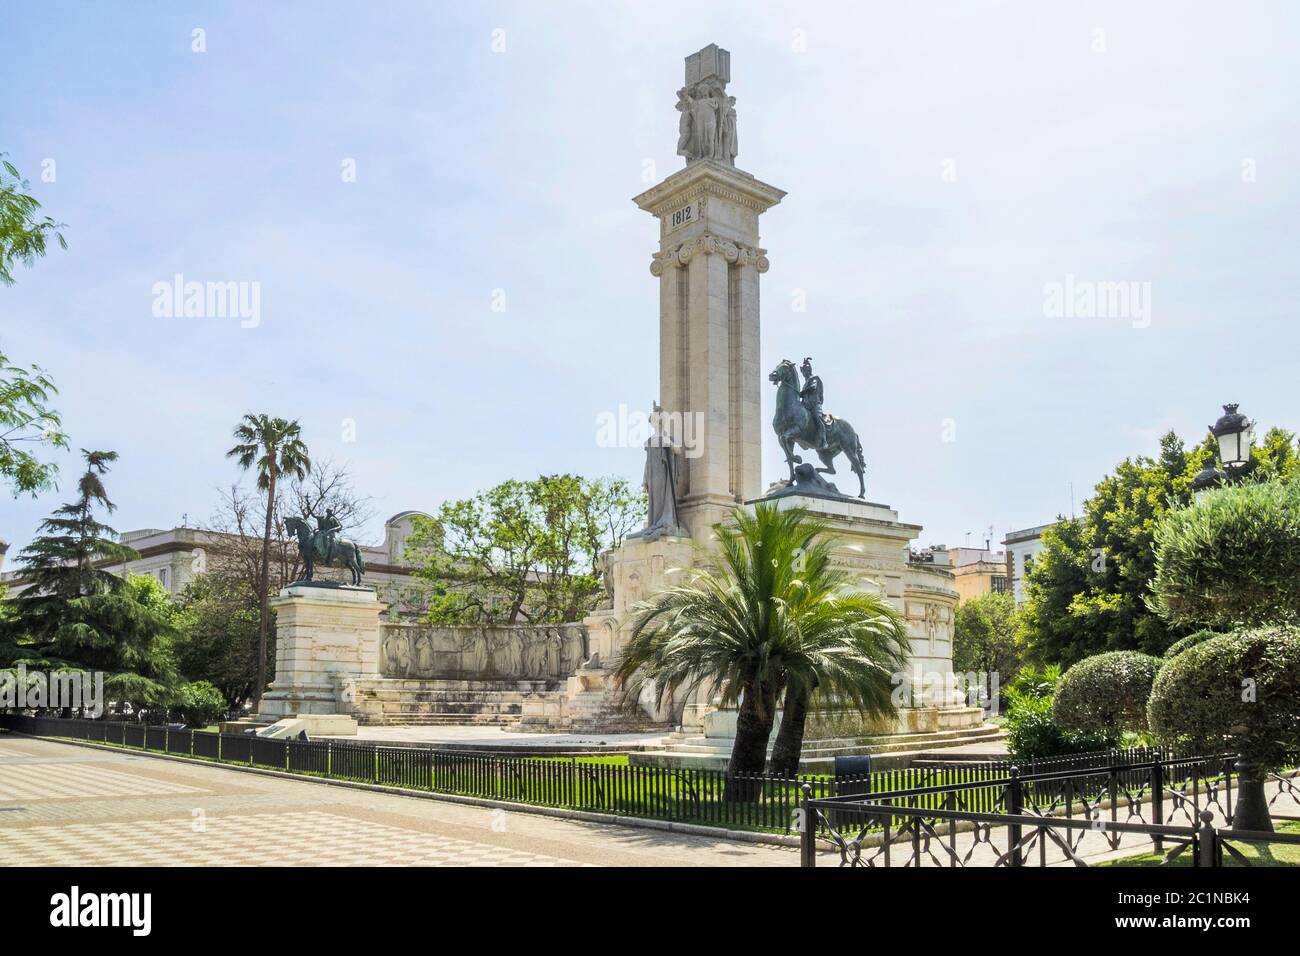 Spain, Cadiz - Monument to the Constitution of 1812 Stock Photo